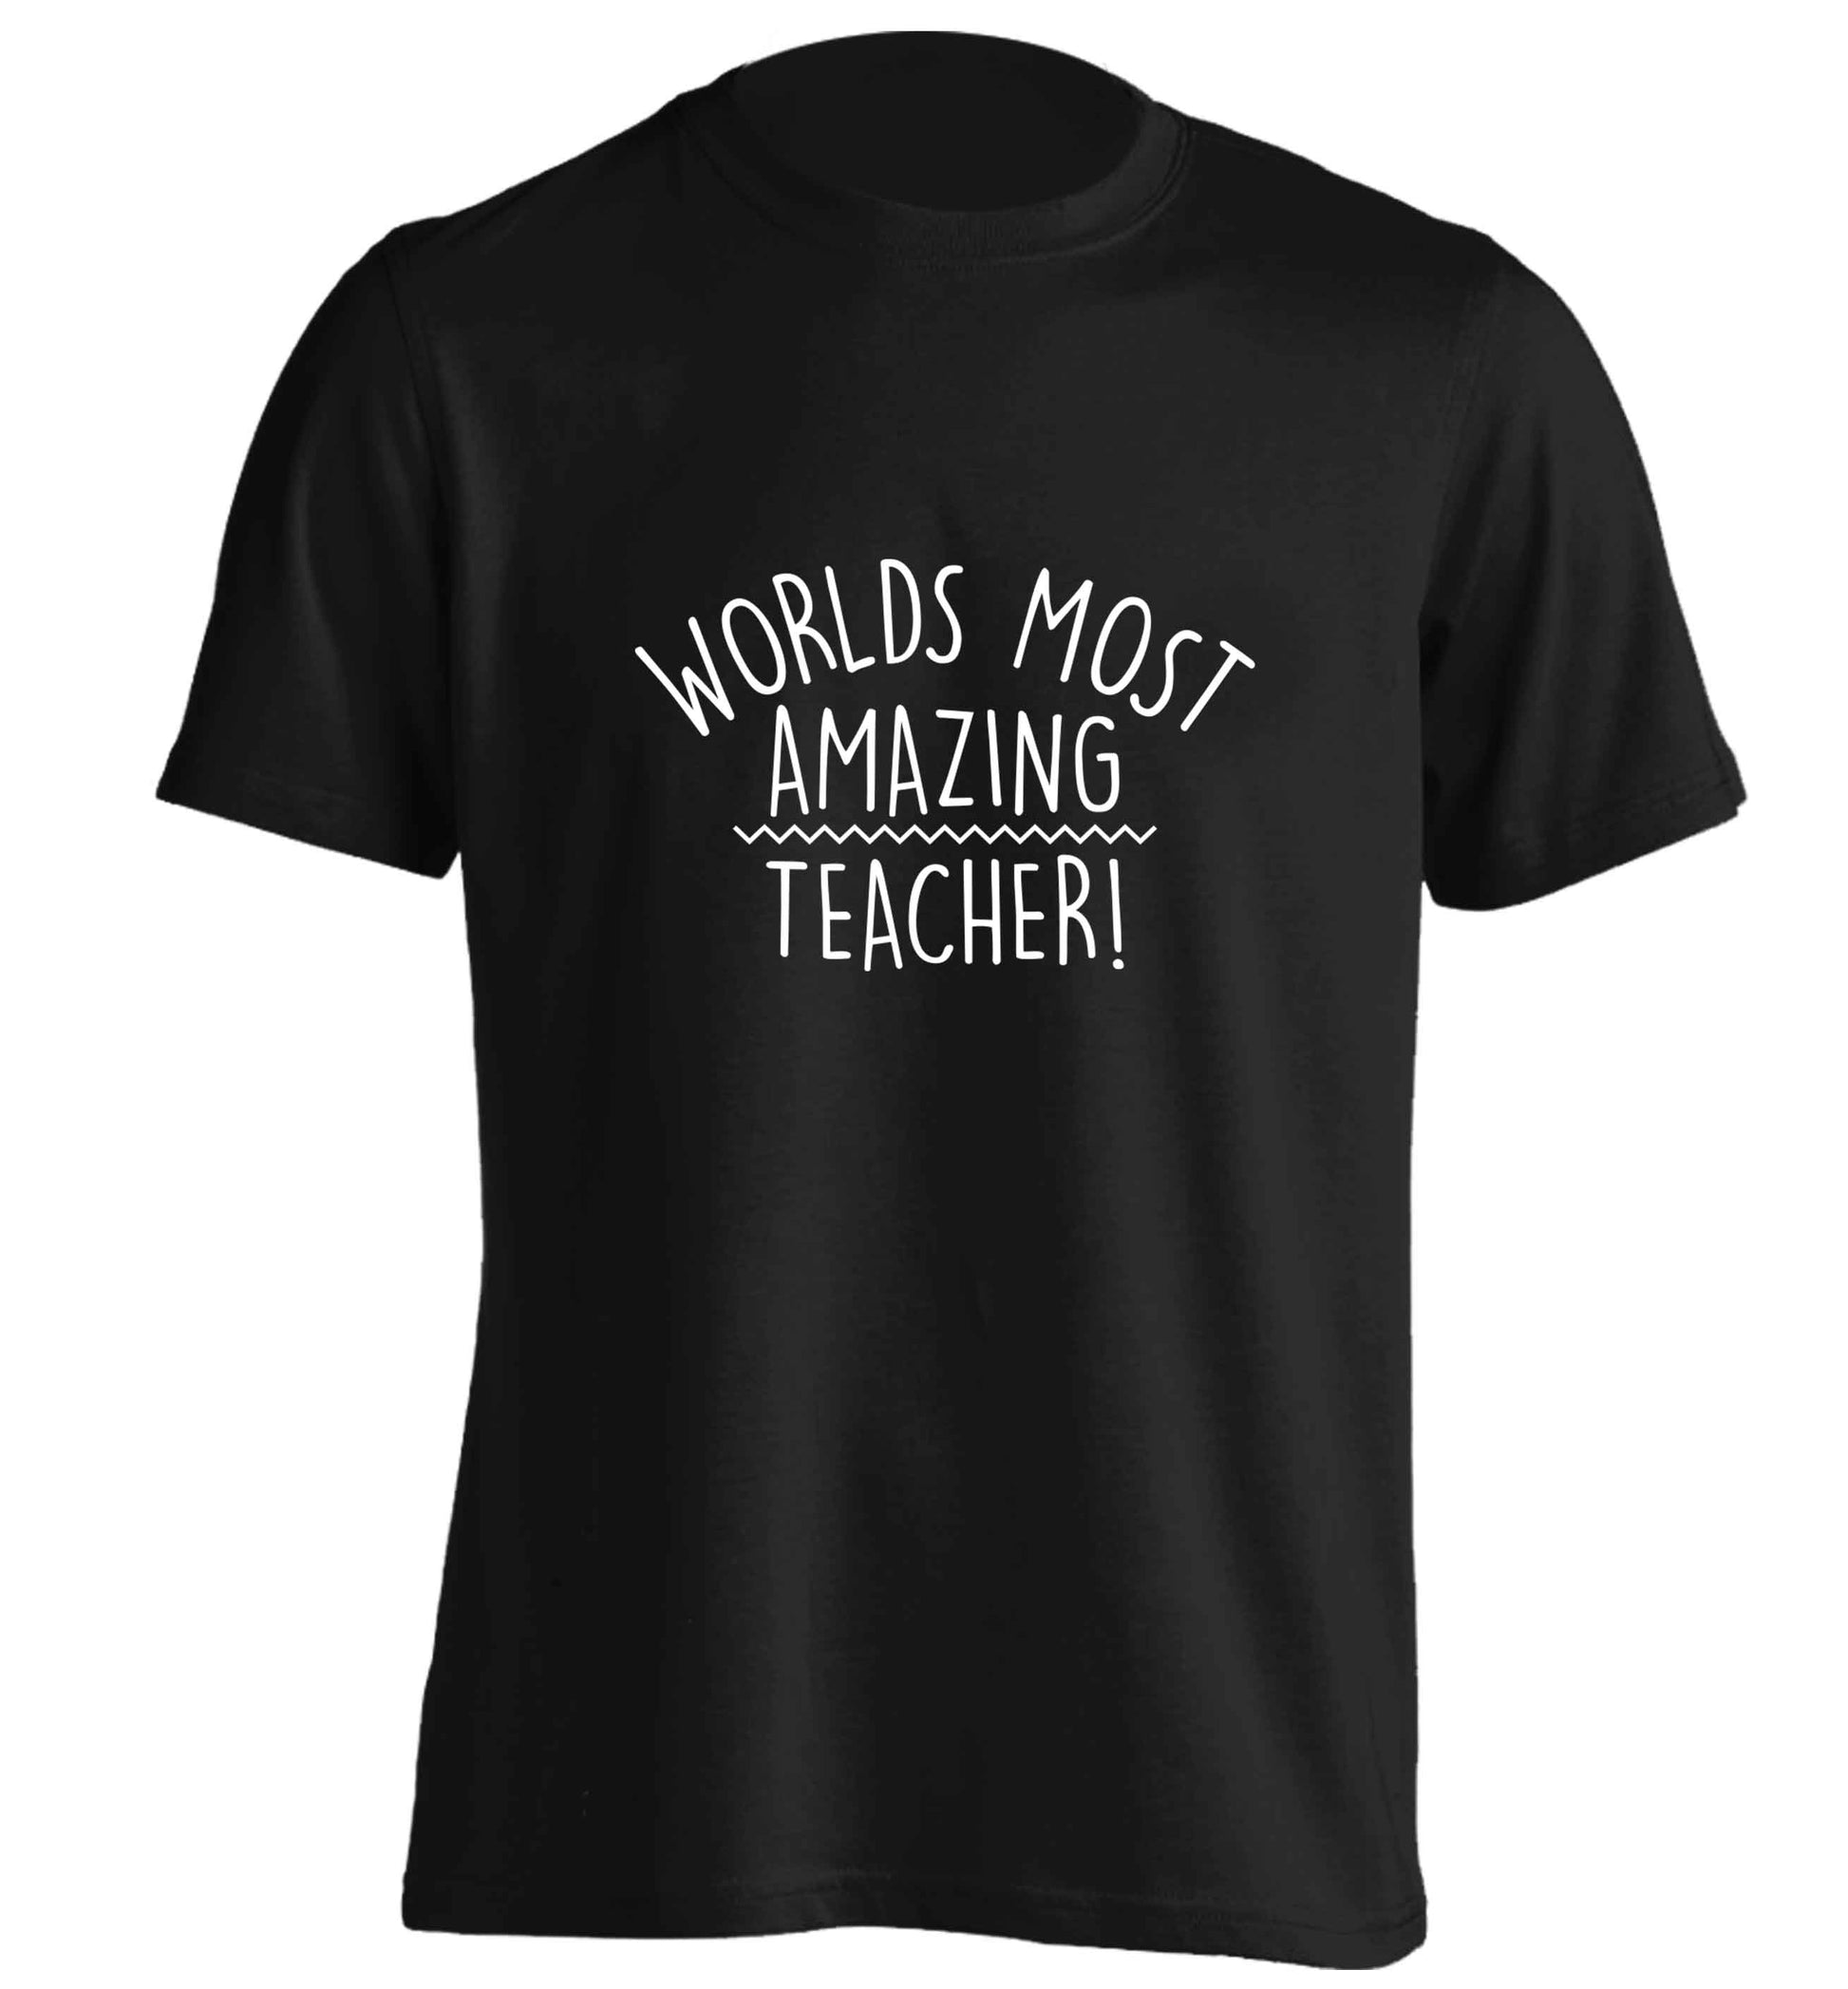 Worlds most amazing teacher adults unisex black Tshirt 2XL